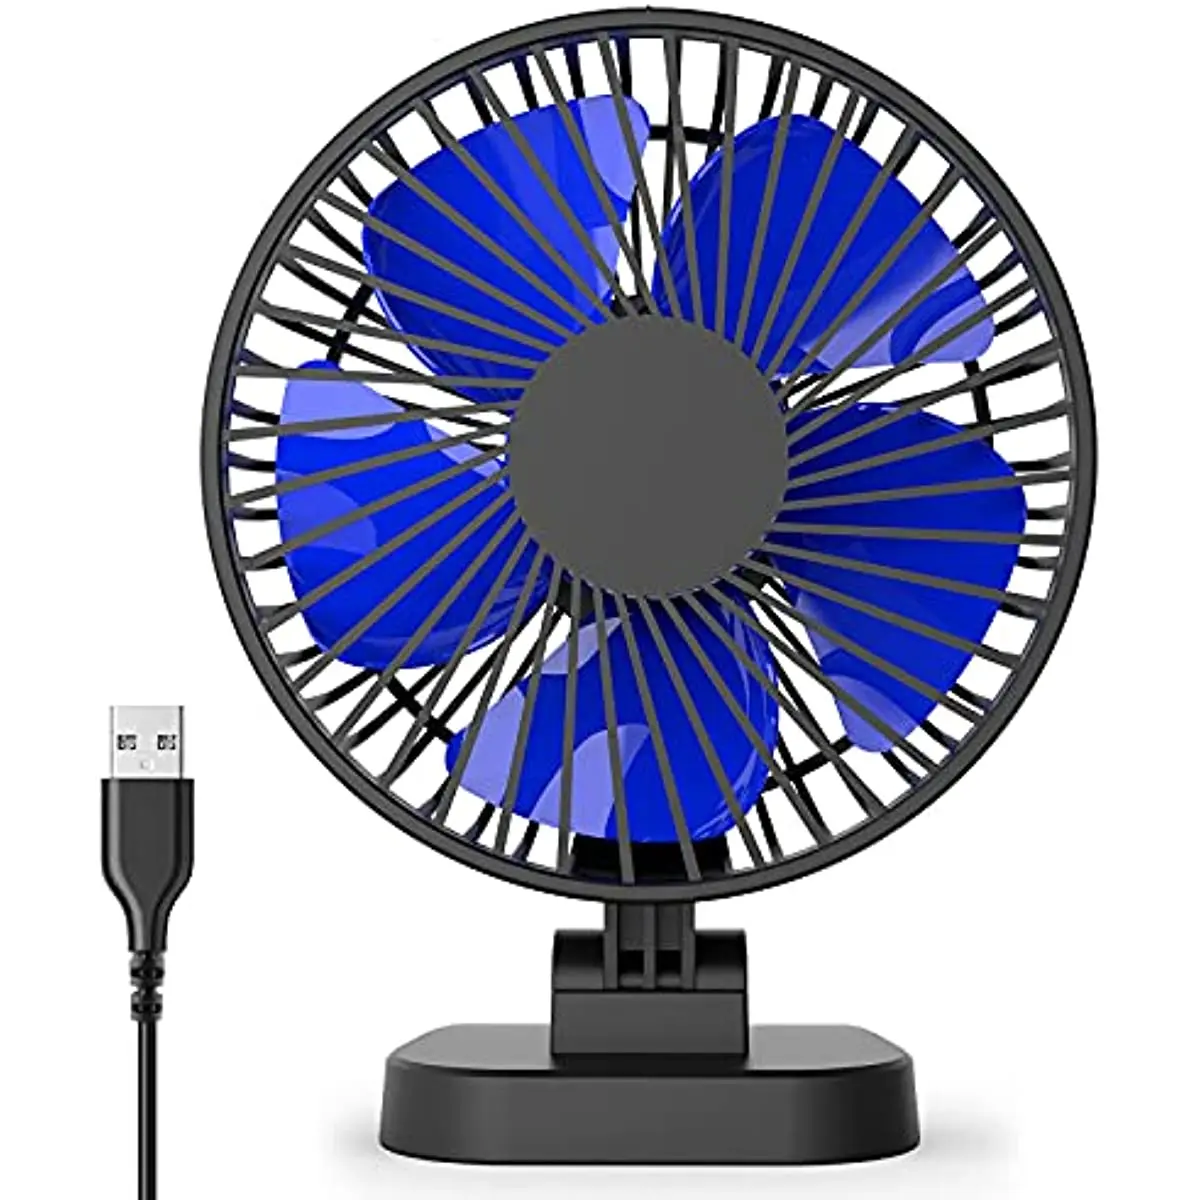 

4 Inch Small Desk Fan, Powerful Airflow, 3 Speeds, USB Powered Table Fan, 40° Head Adjustment, Ultra Quiet